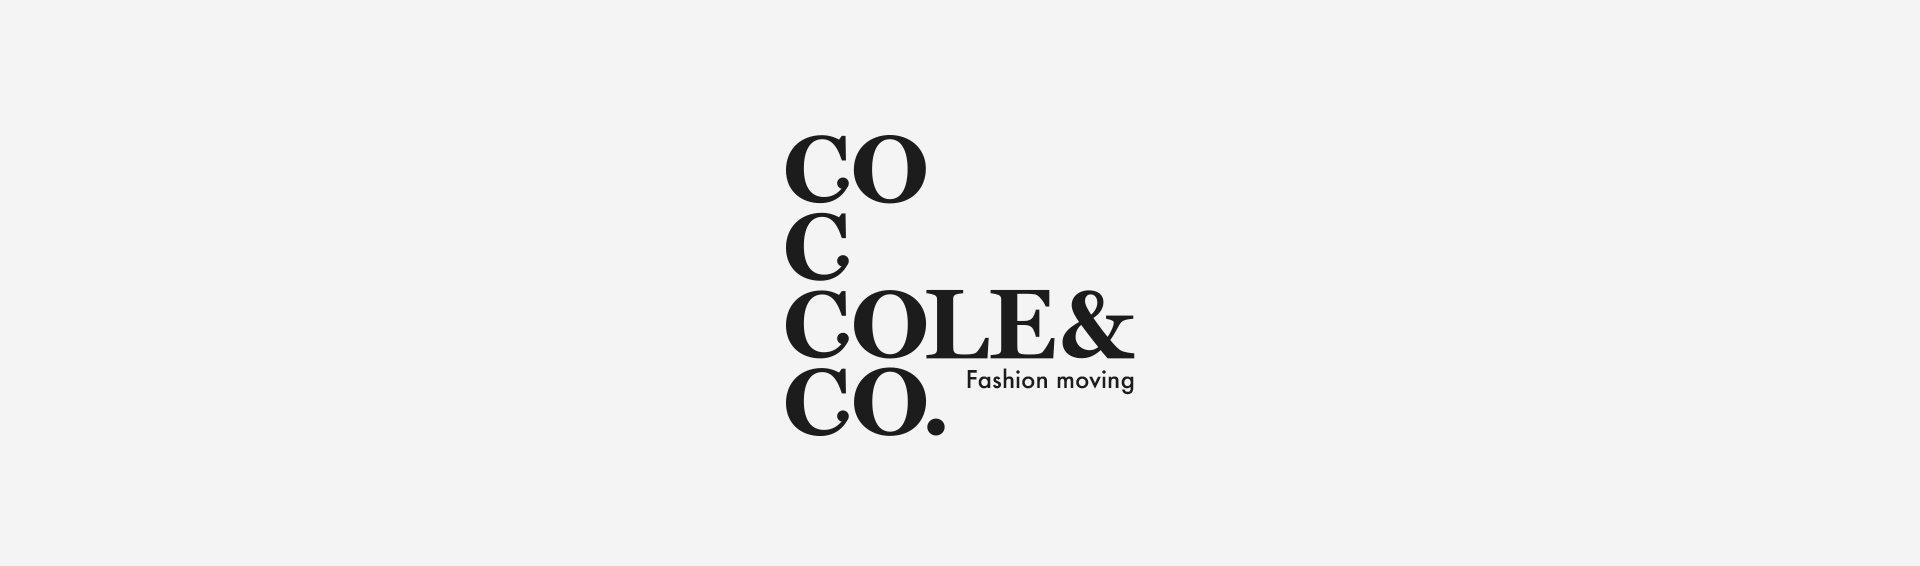 coccole_logotype_identity_corporate